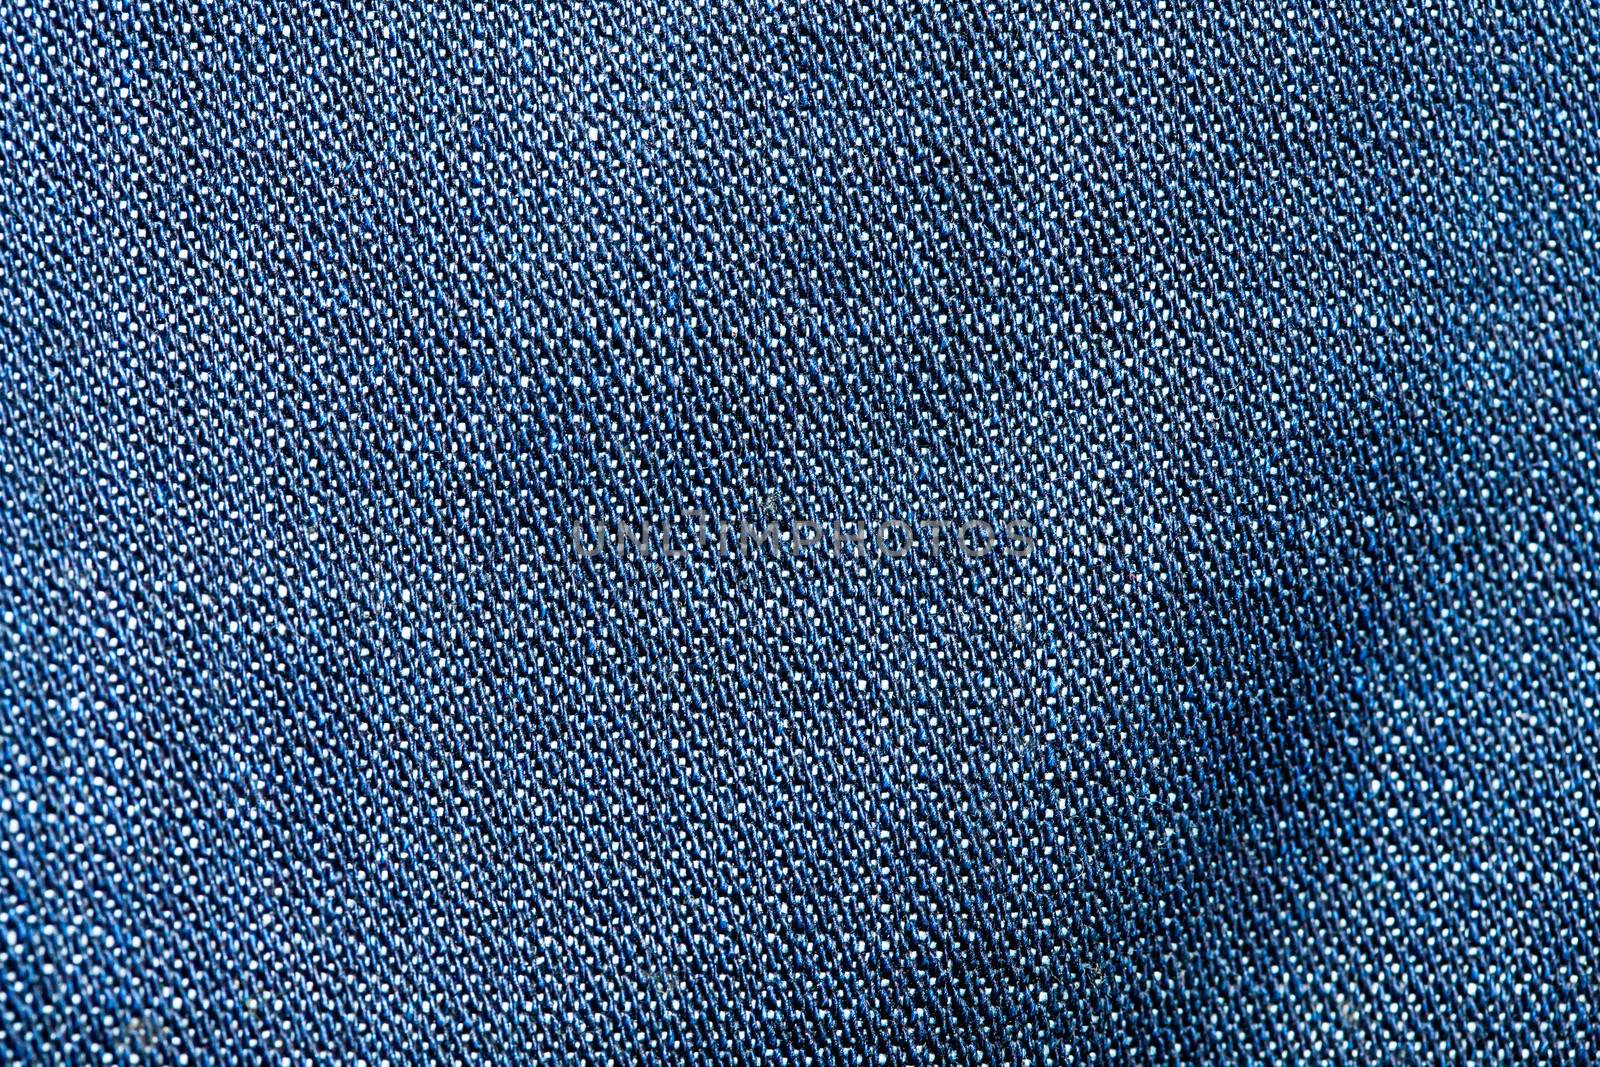 High resolution scan of light blue denim fabric.